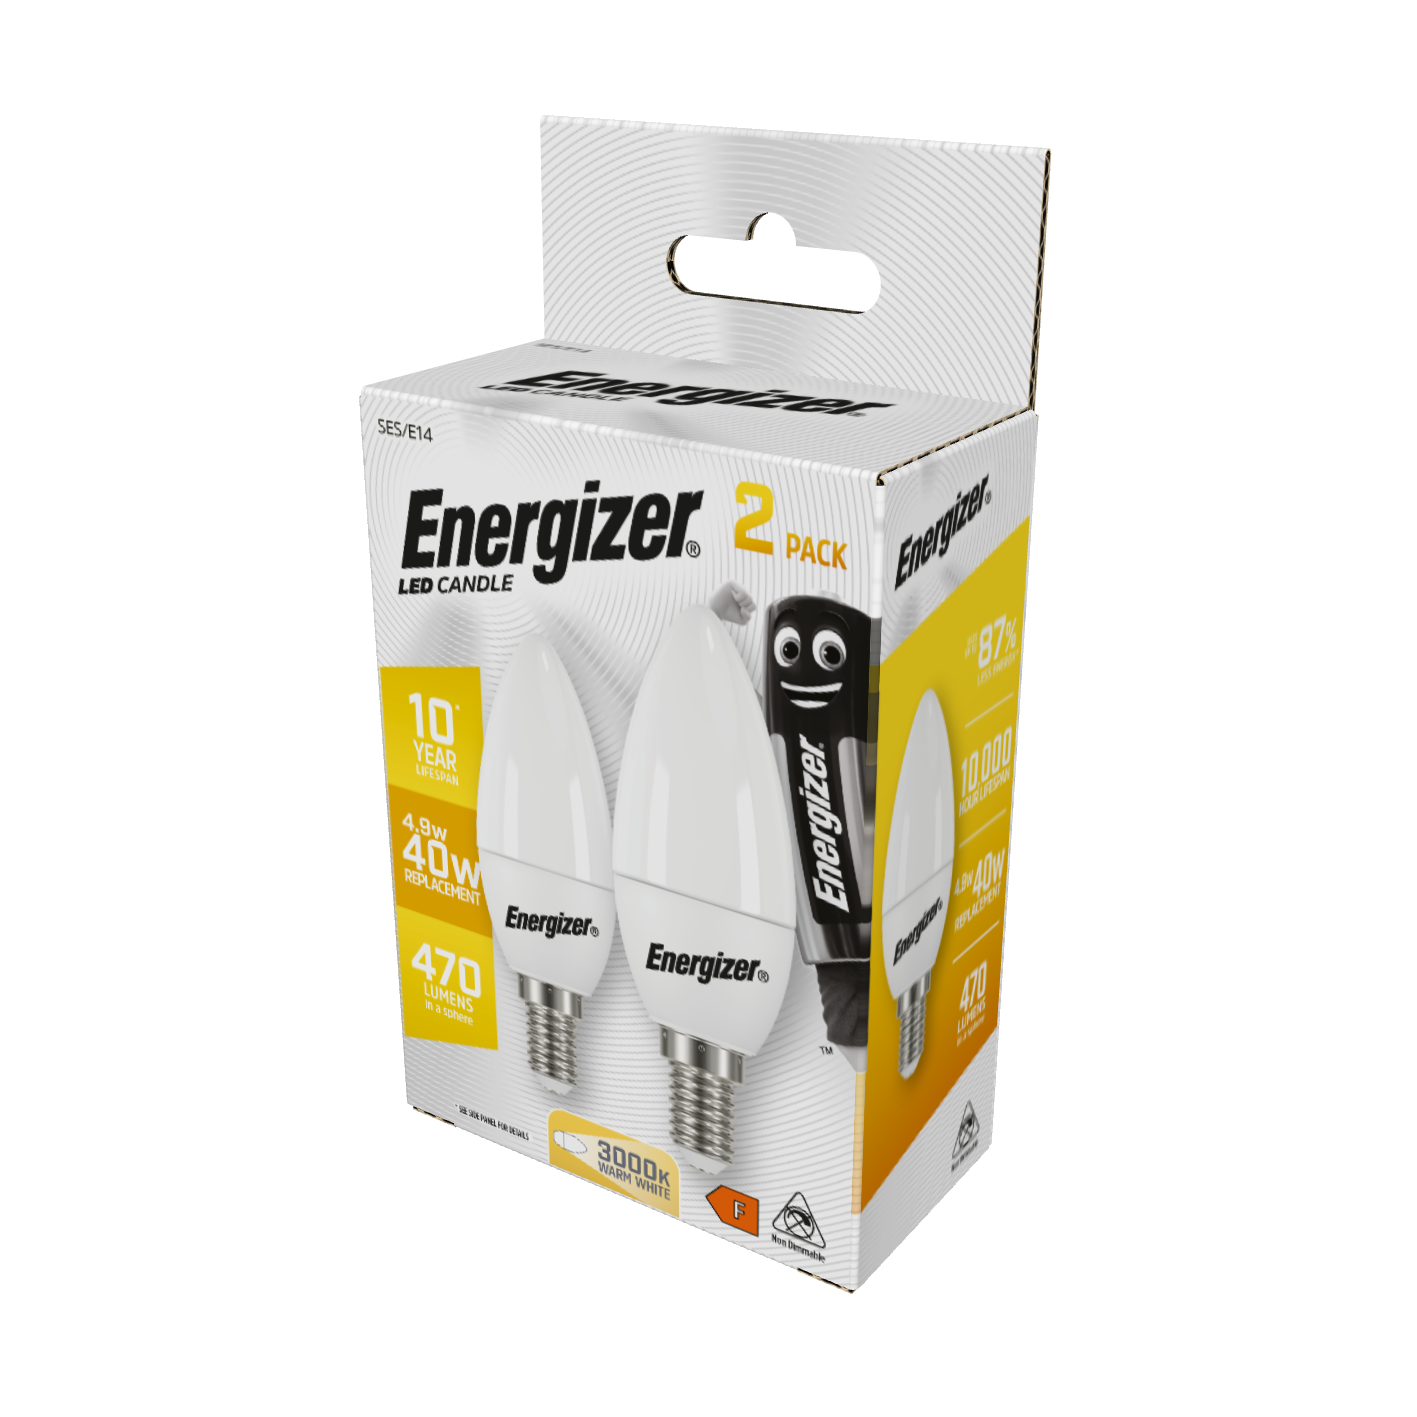 Energizer LED Candle E14 (SES) 470lm 4.9W 3,000K (Warm White), Box of 2